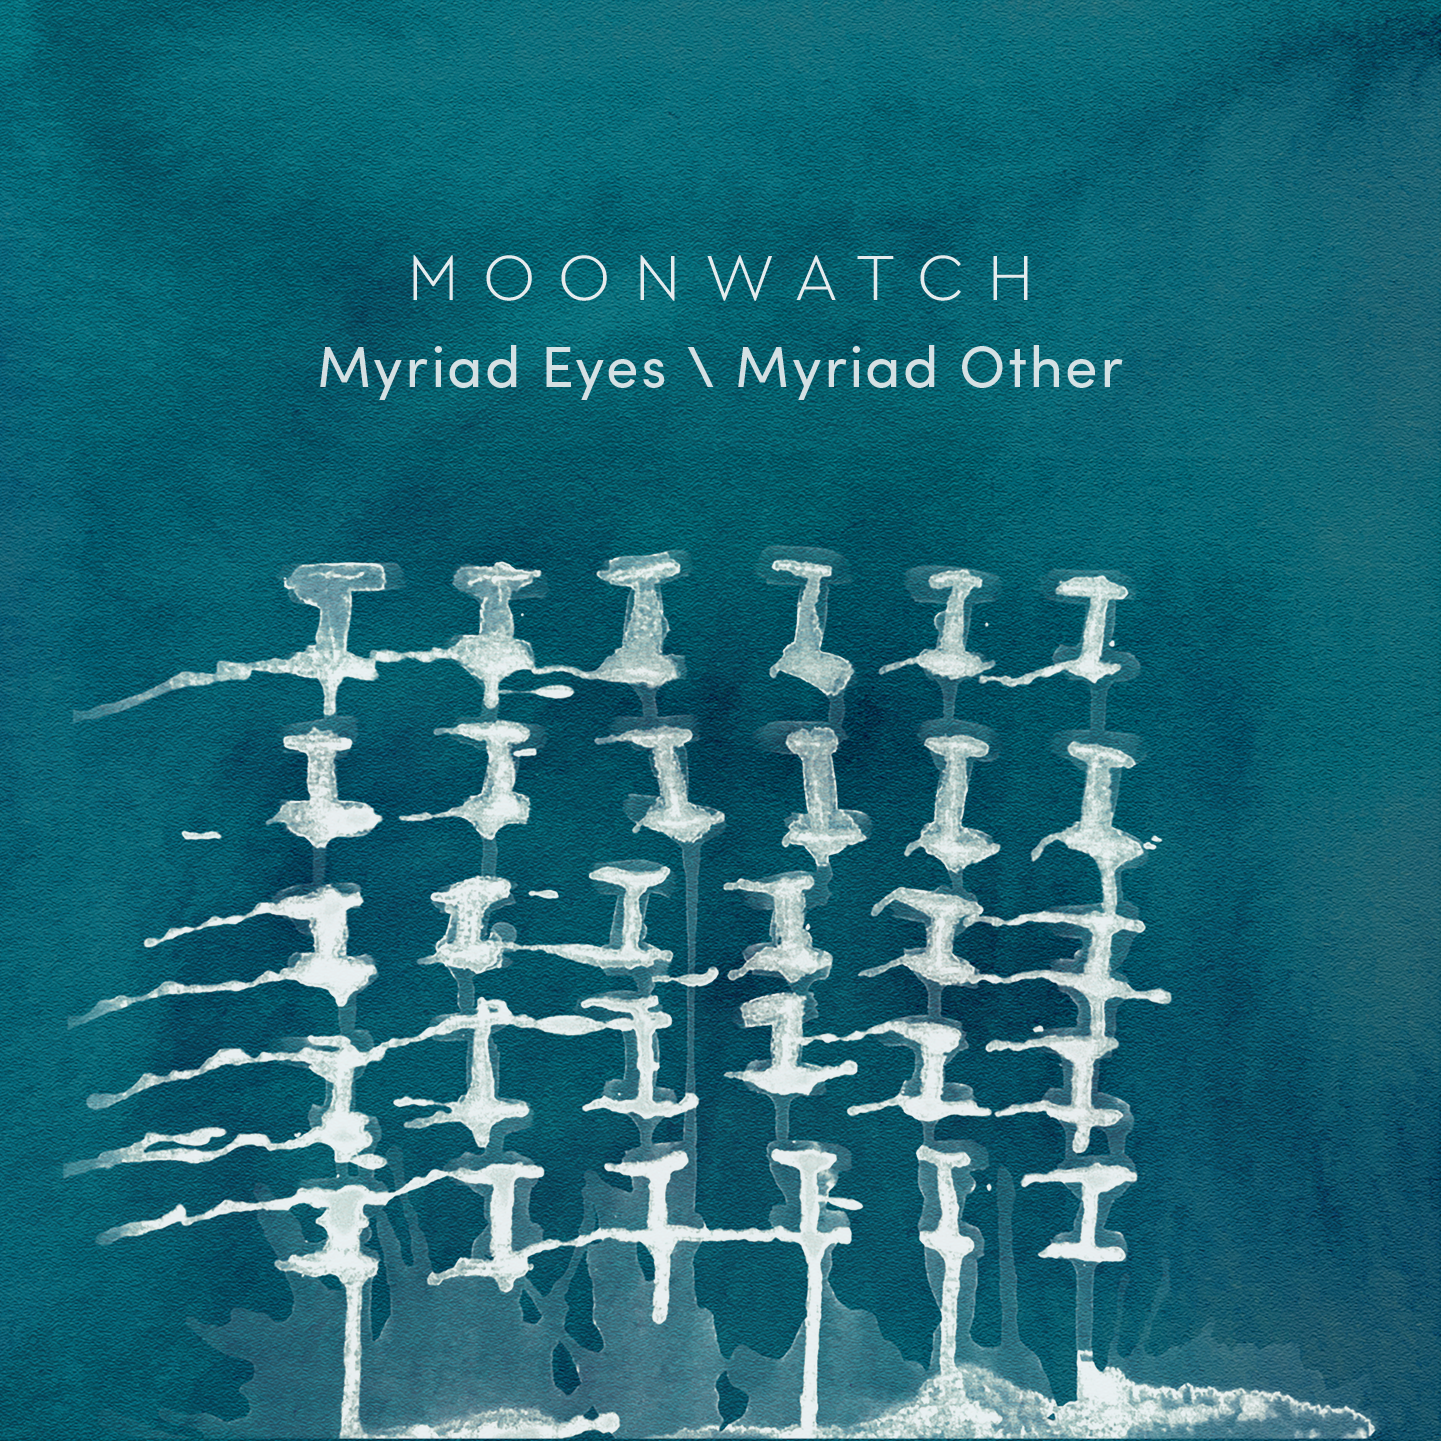 Moonwatch MEMO album cover